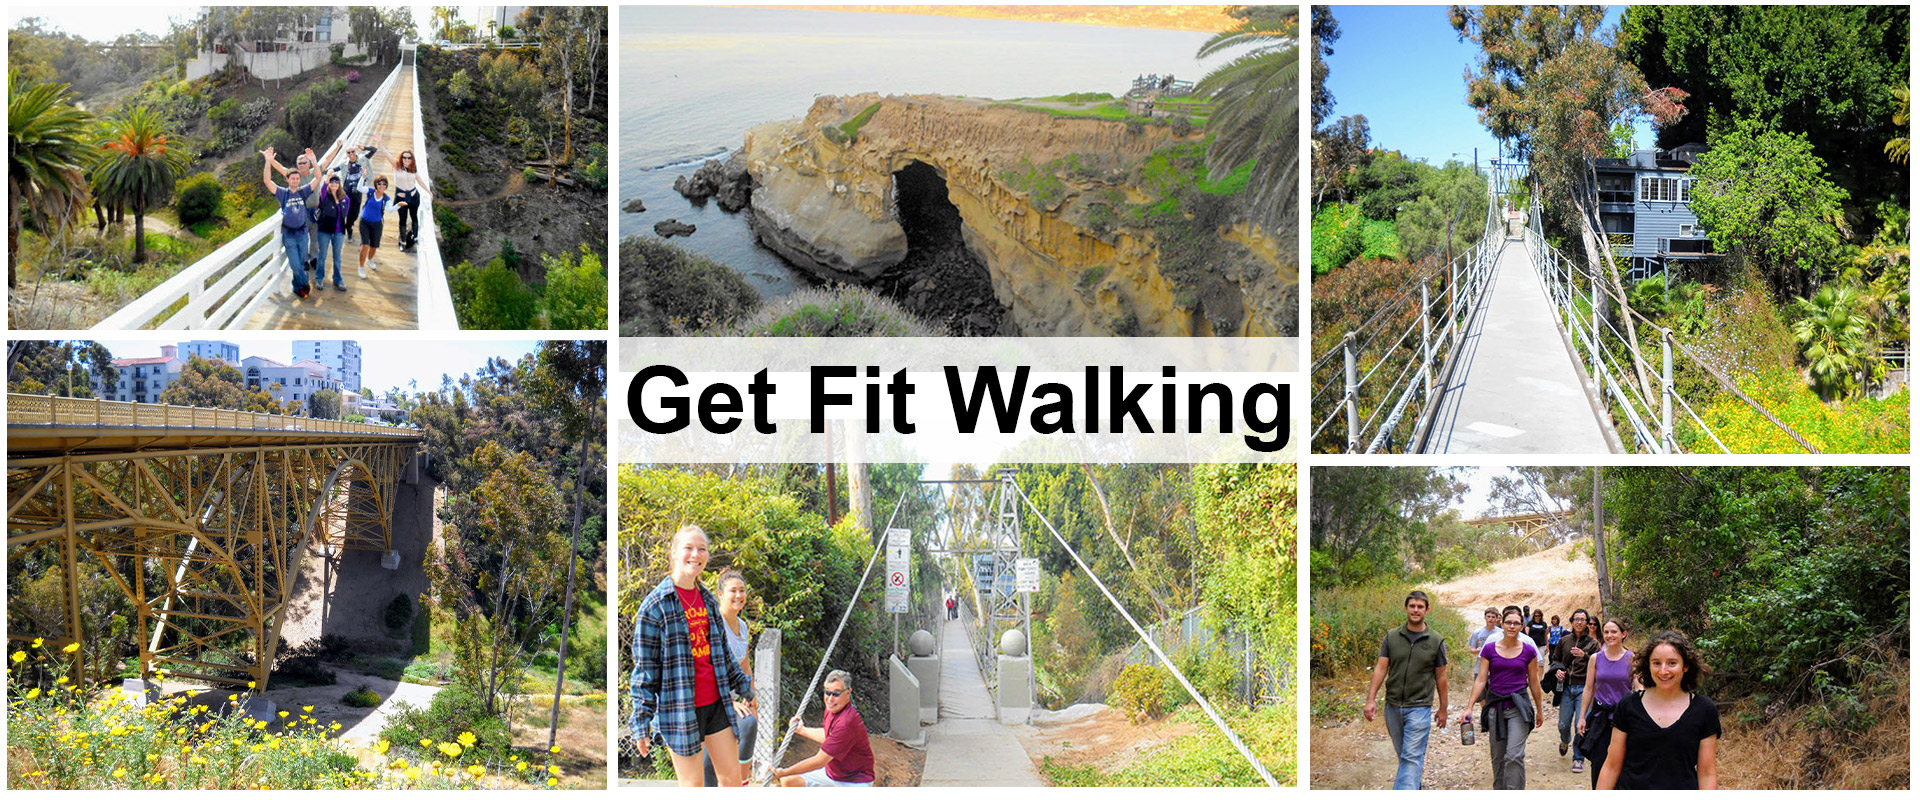 Get Fit Walking